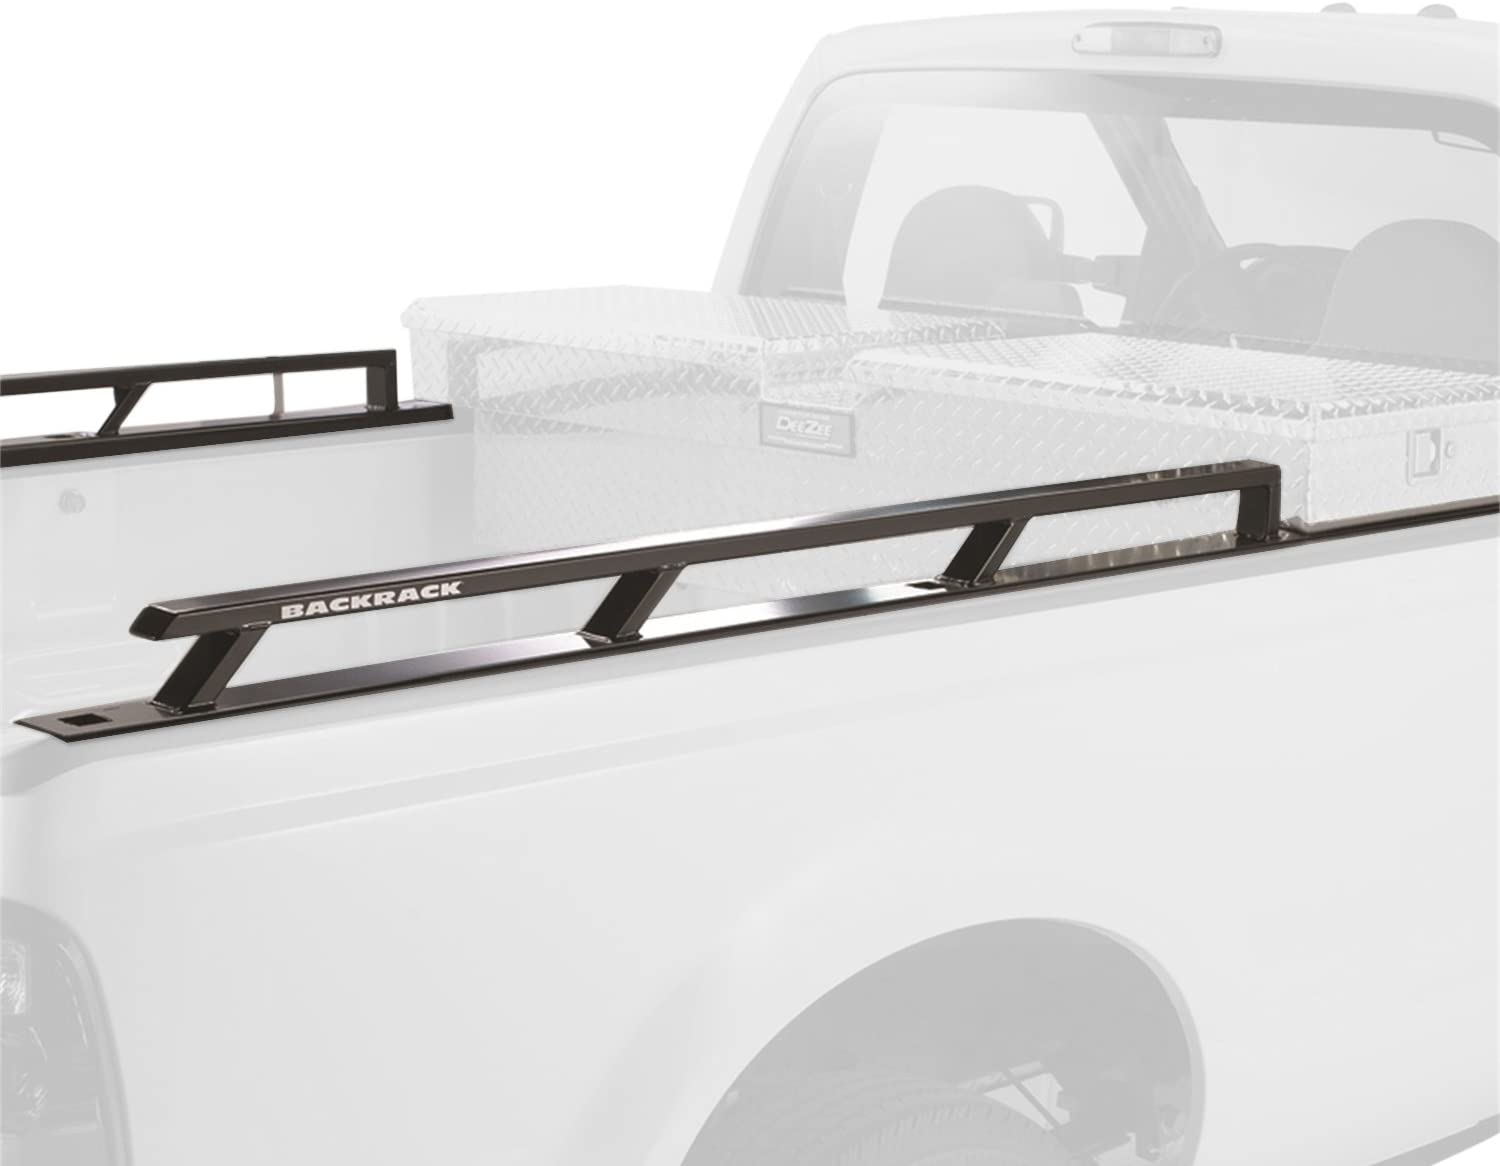 80523TB - BackRack Side Rails, 8 ft Bed, 2015-TD F-150 Aluminum New Body  21" Toolbox